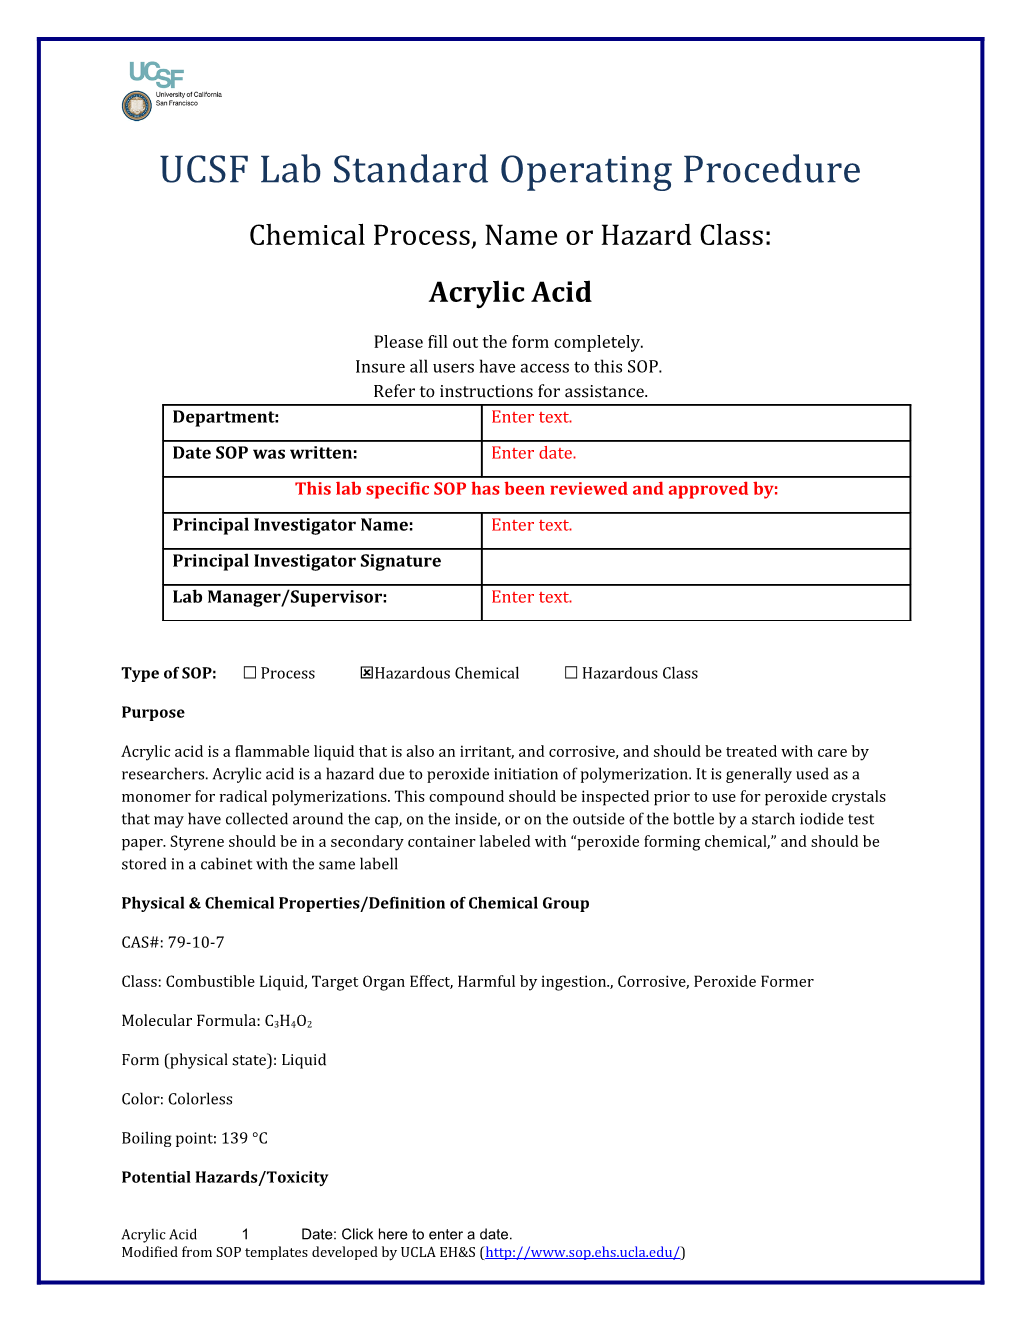 UCSF Lab Standard Operating Procedure s22